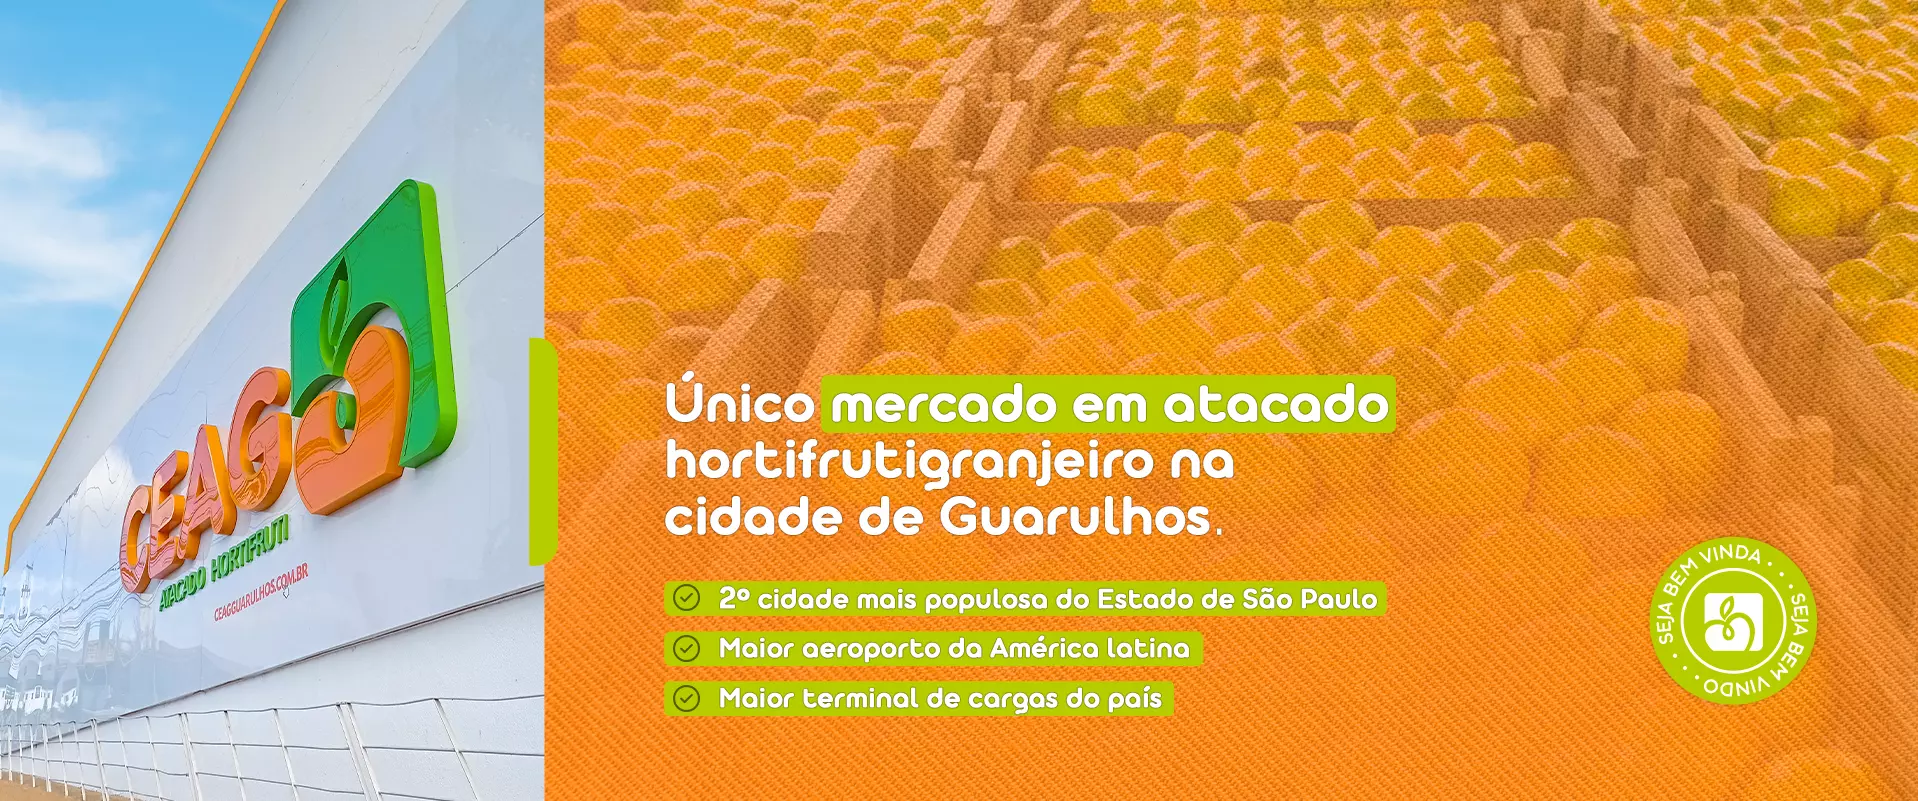 Ceag Guarulhos